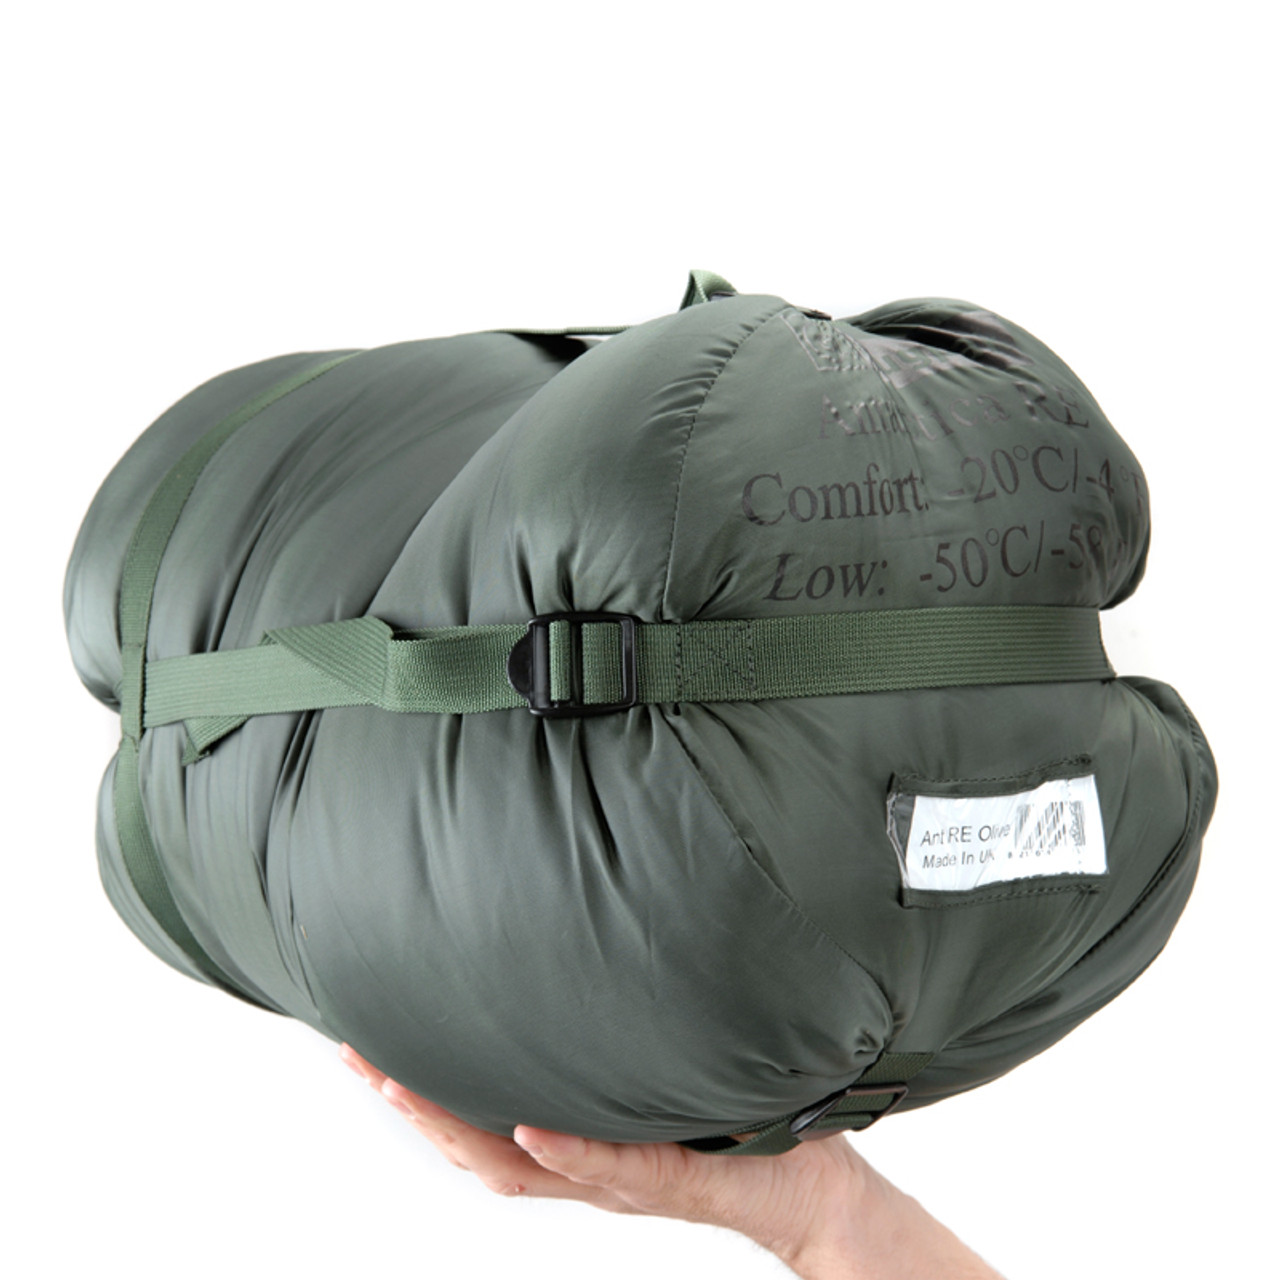 Snugpak寝袋 ソフティー18 アンタークティカ オリーブ (日本正規品)材質アウター生地PA